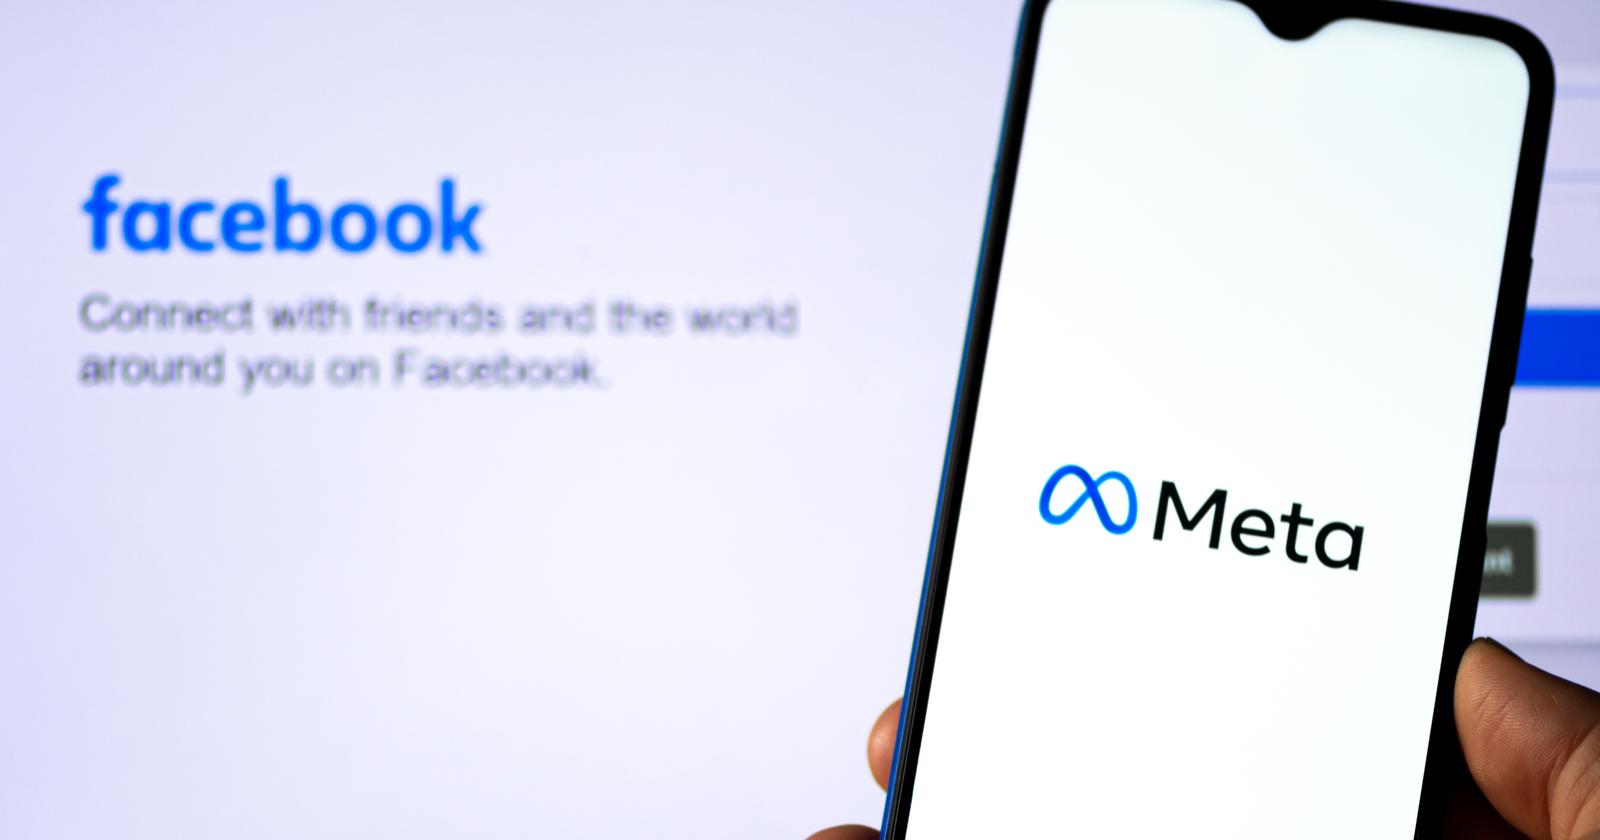 Meta Introduces Professional Mode For Facebook Profiles via @sejournal, @MattGSouthern